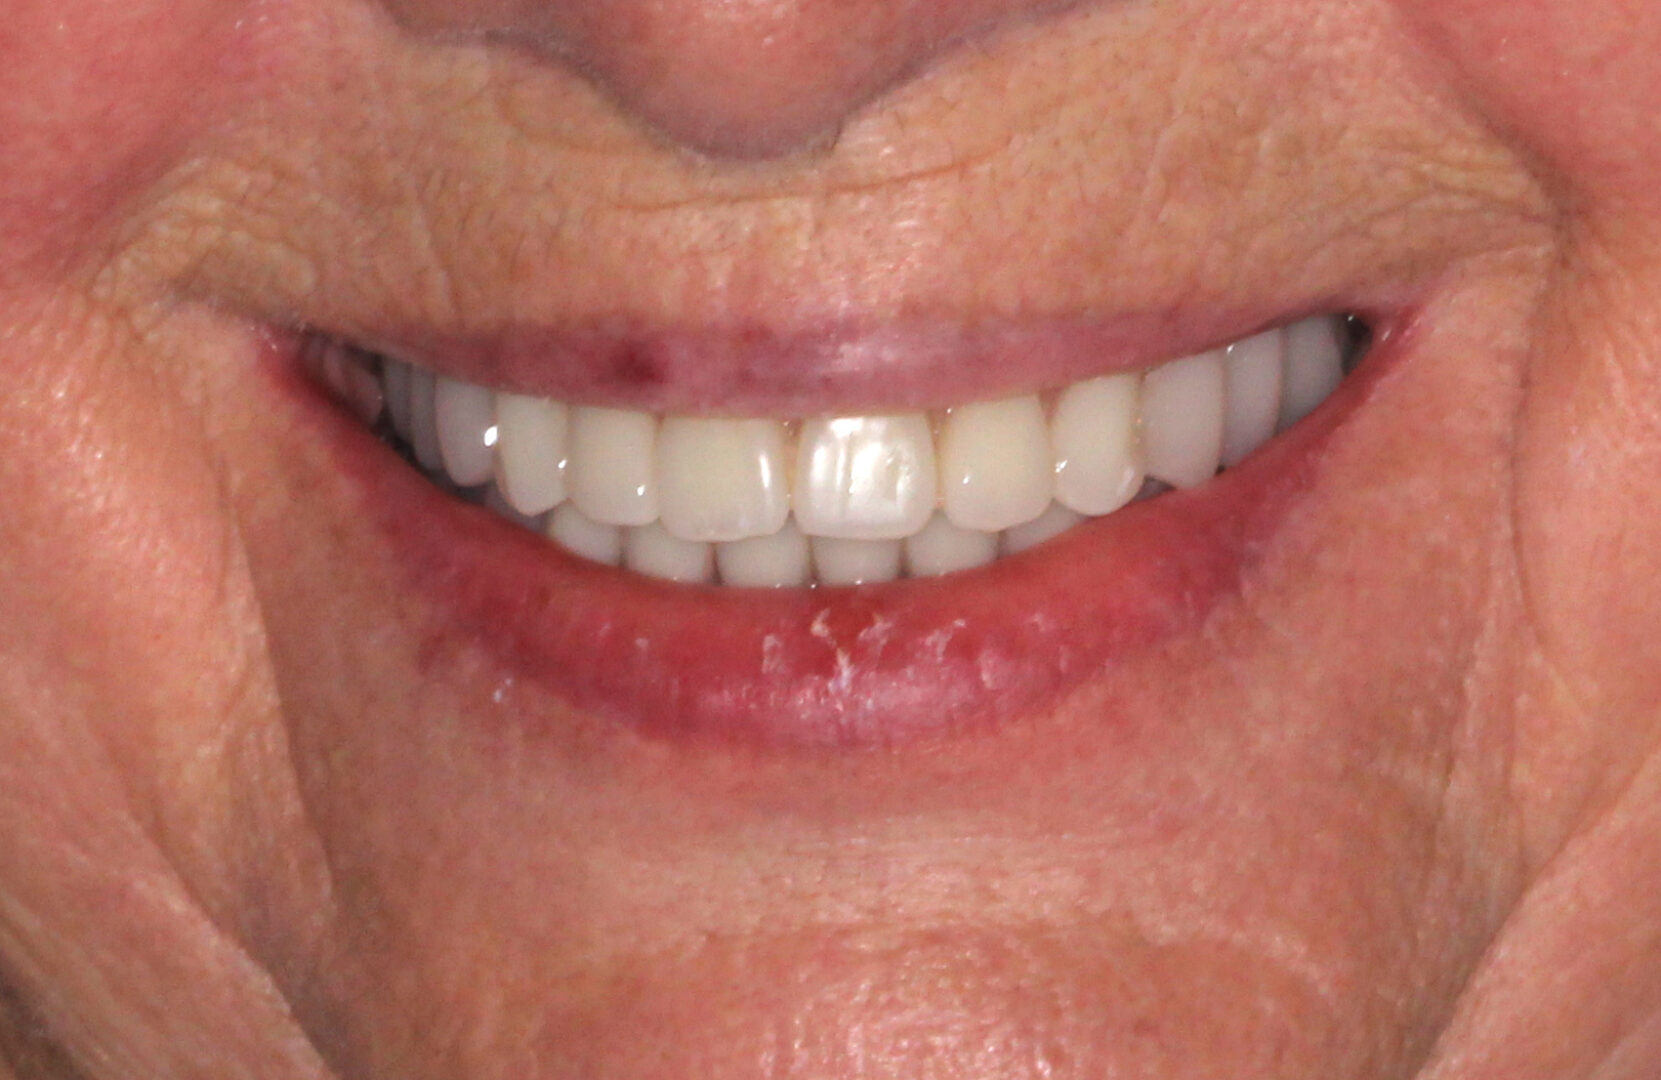 After applying restorations and dentures